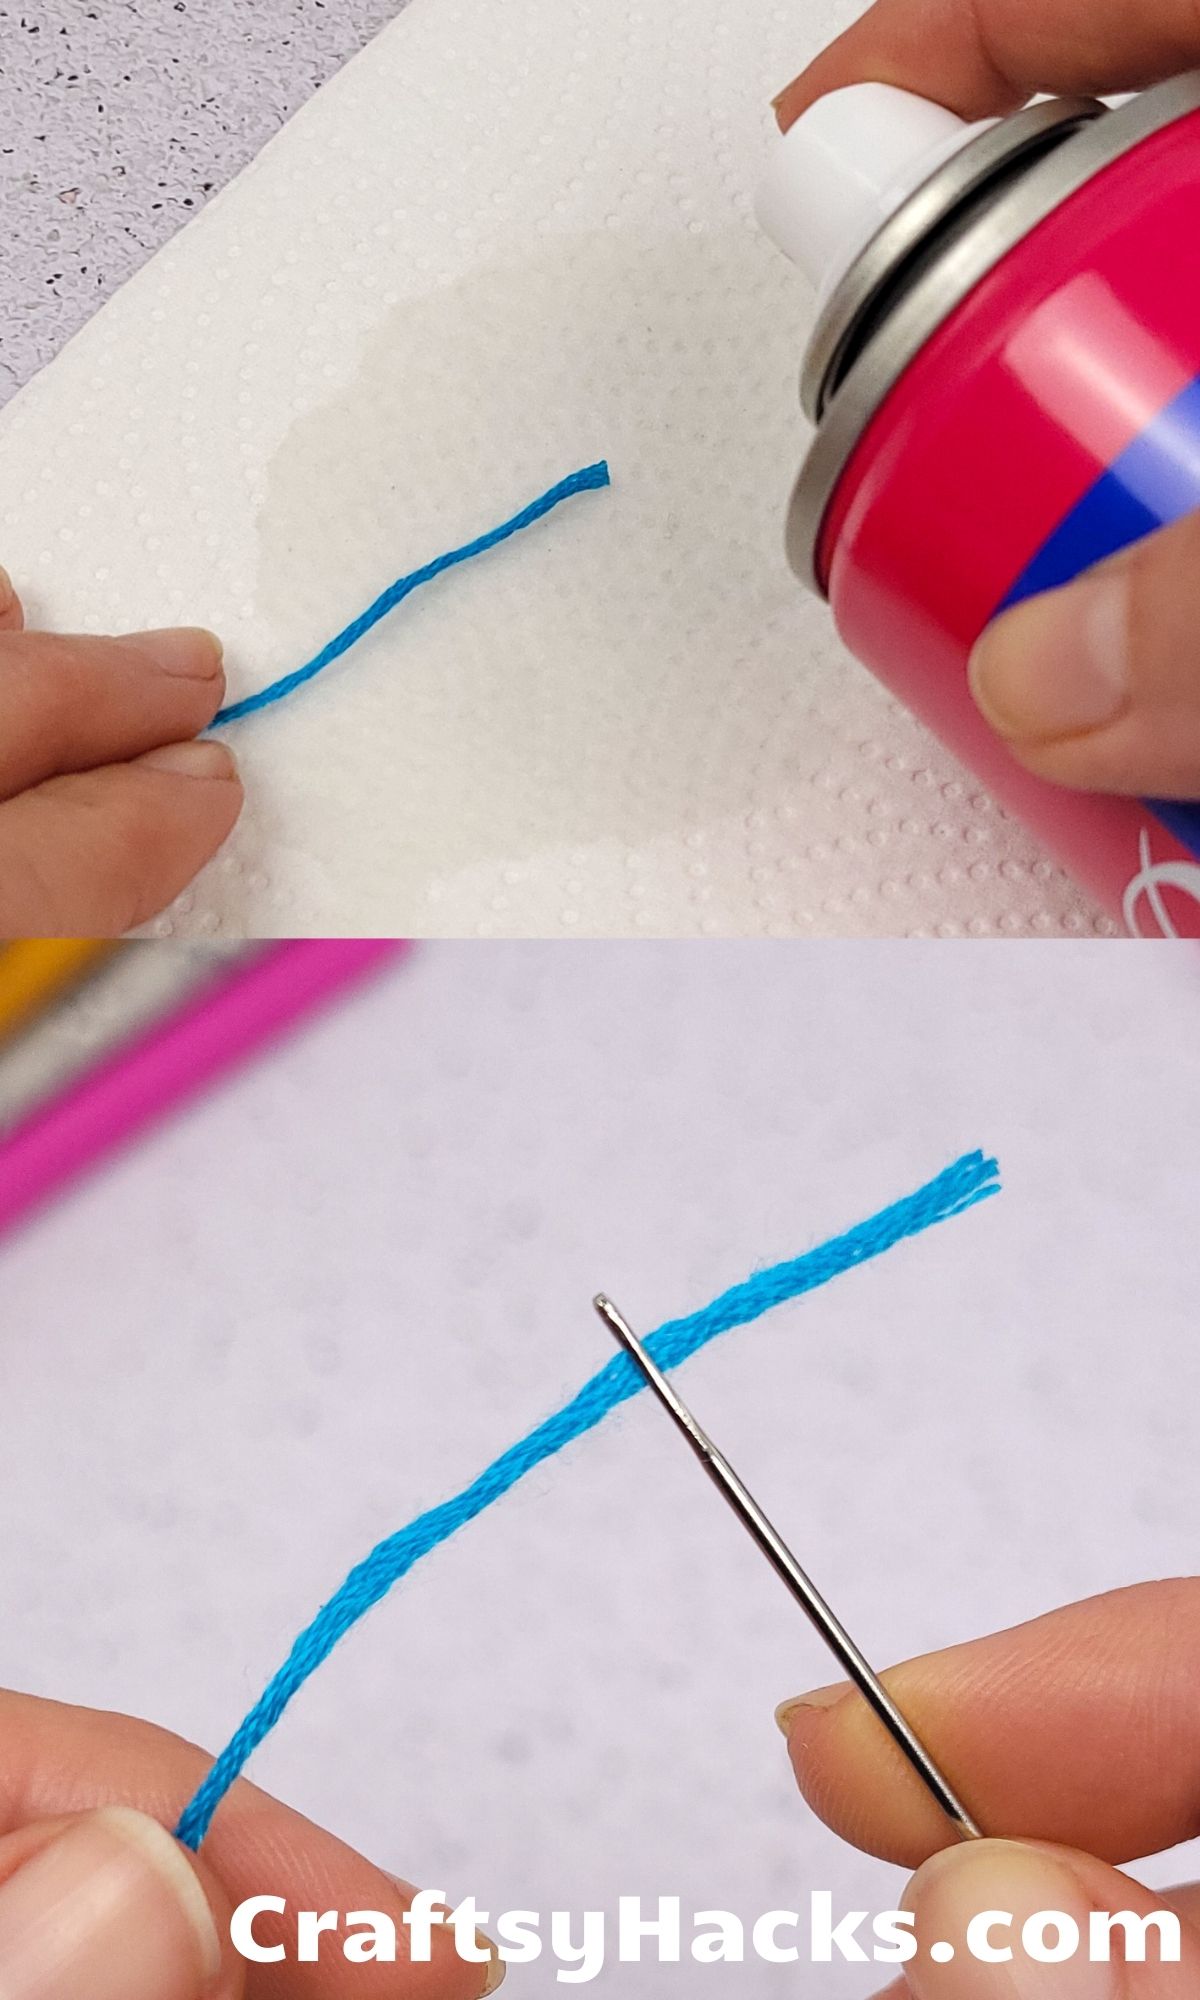 Prevent Fraying When Threading Needles